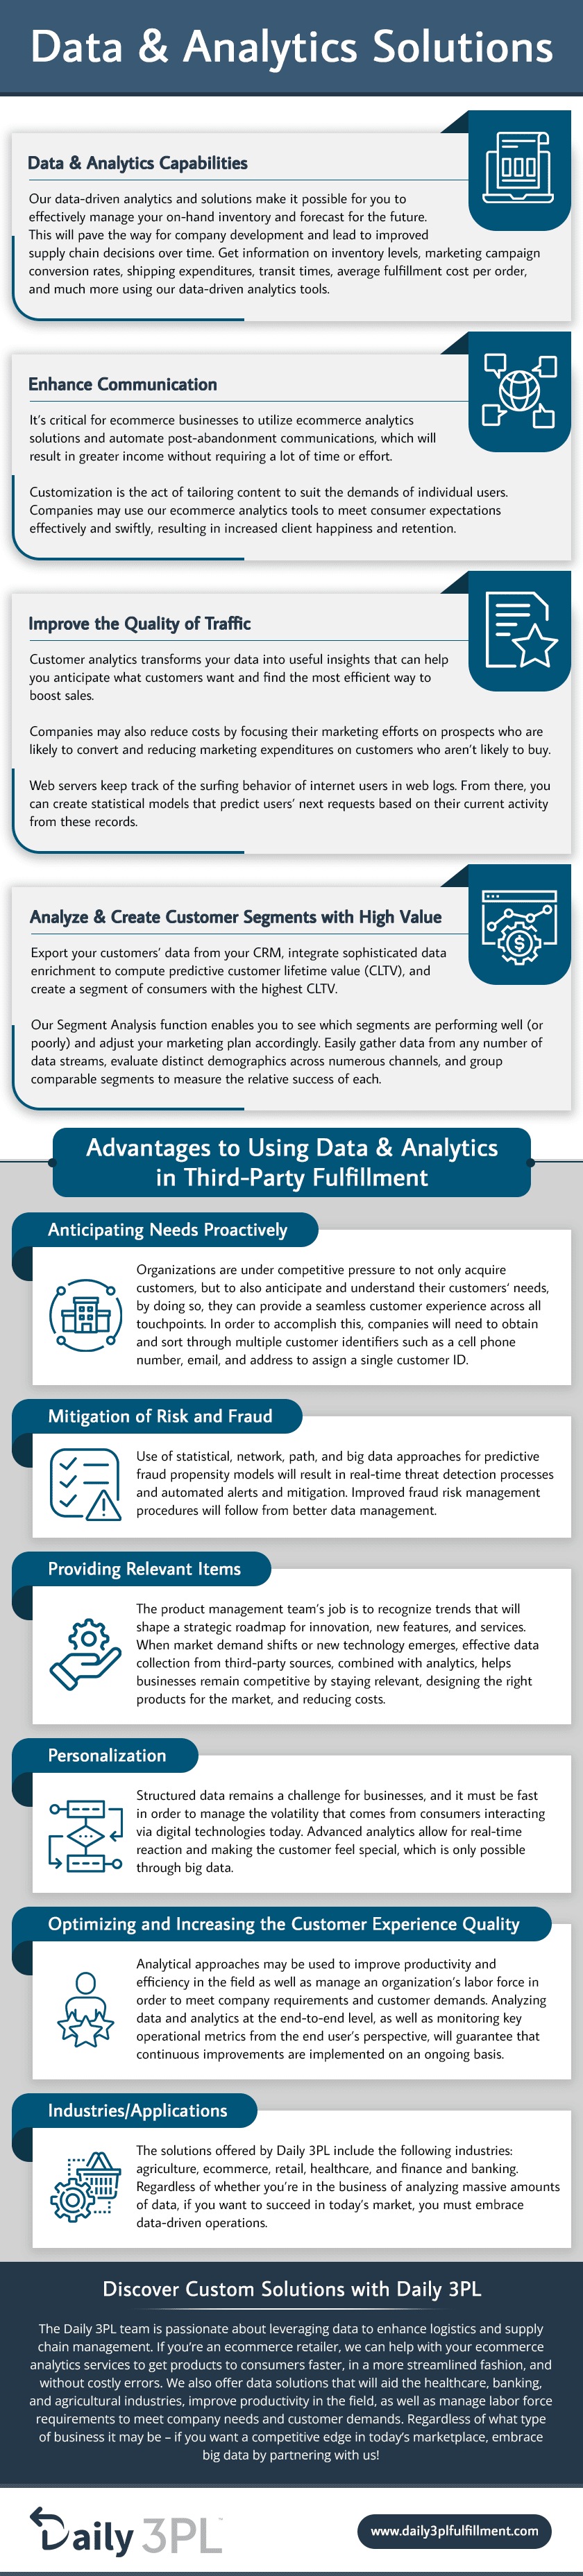 Data & Analytics Solutions